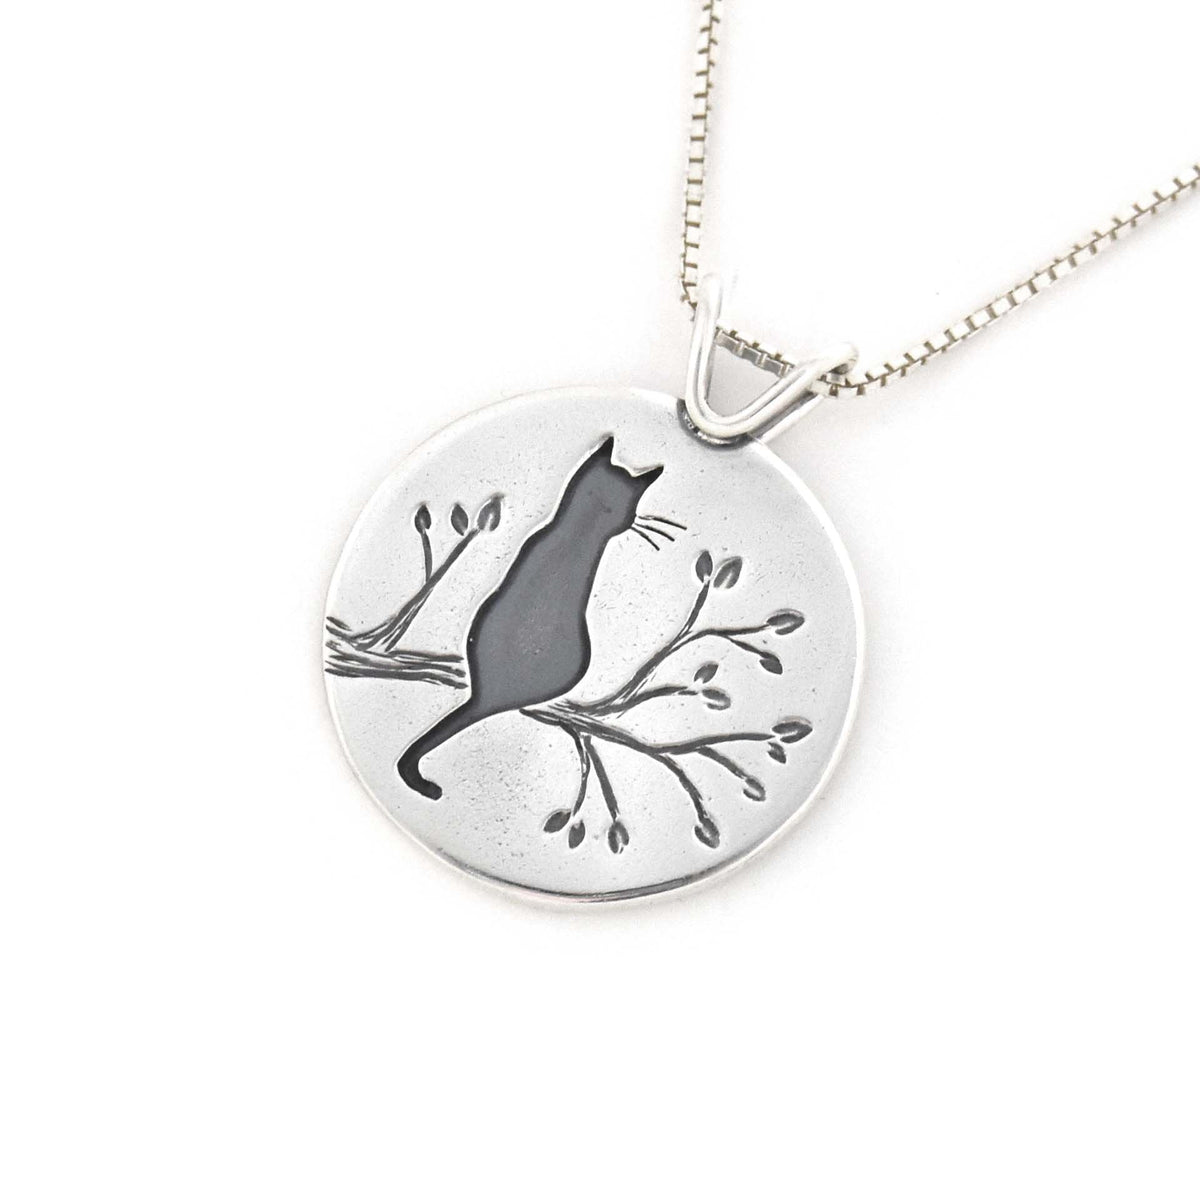 Cat Pendant - Silver Pendant   5633 - handmade by Beth Millner Jewelry